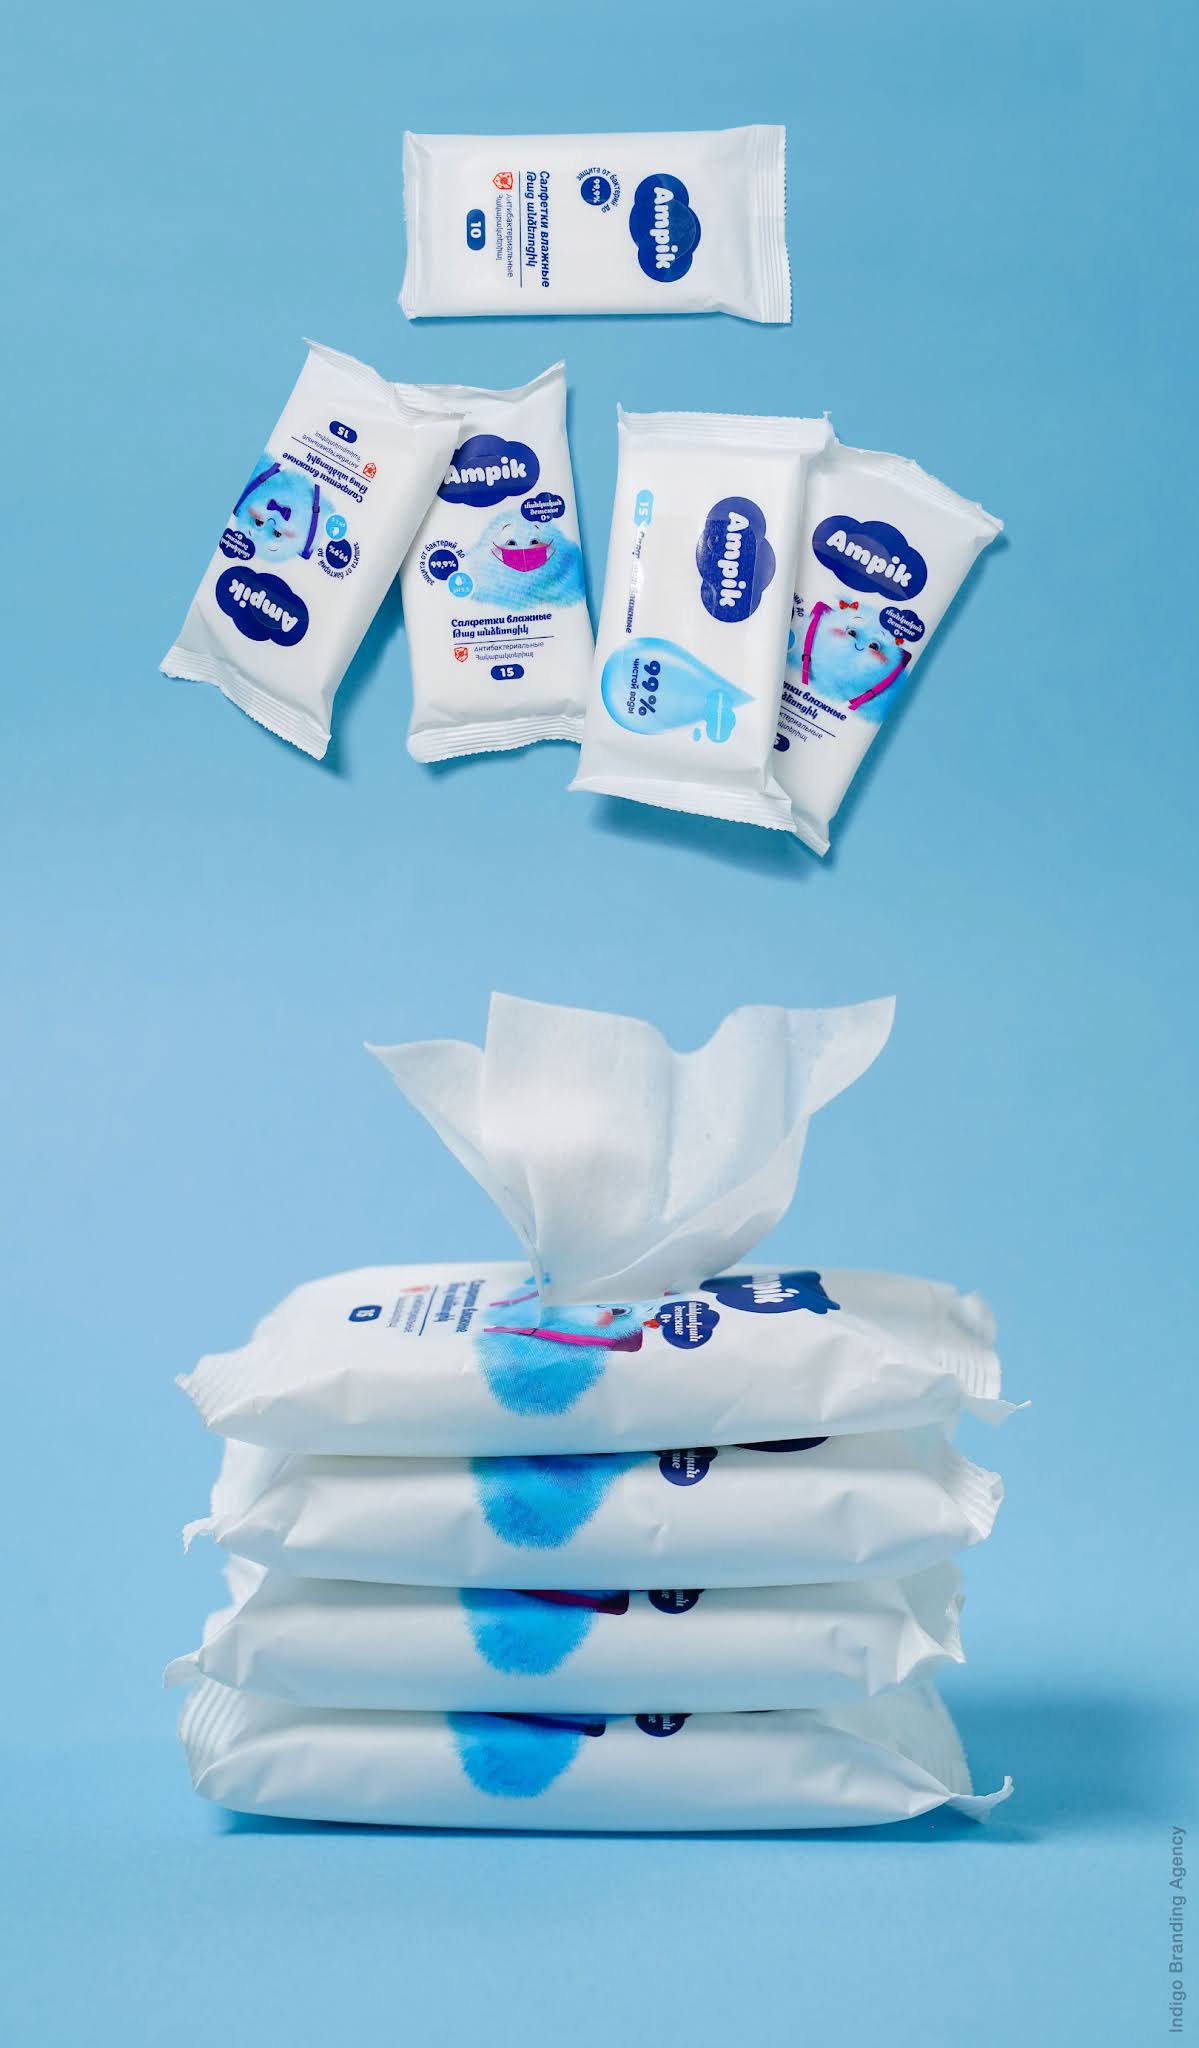 Ampik湿巾卫生用品包装设计